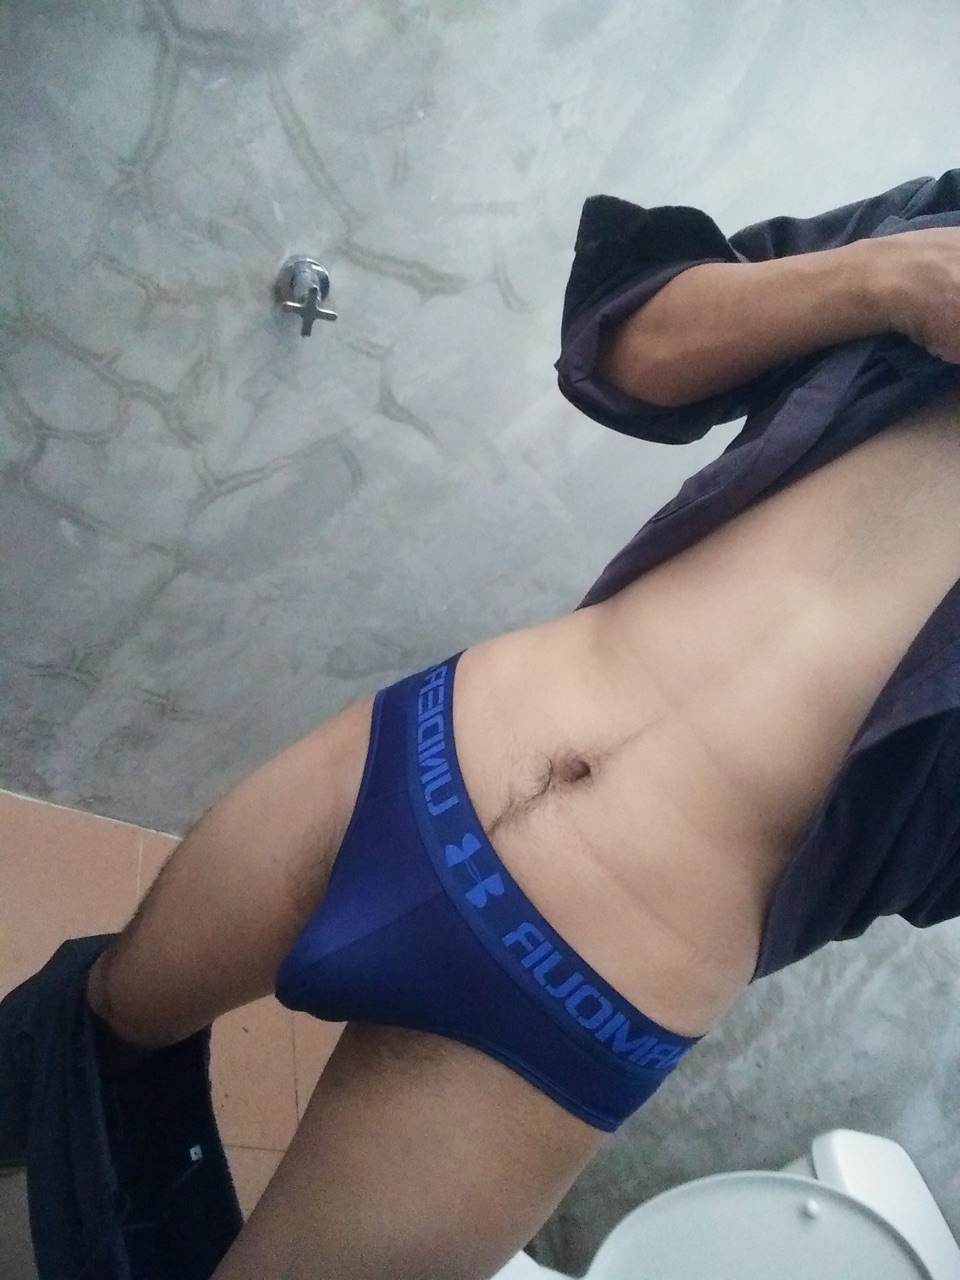 Hot men in underwear 514